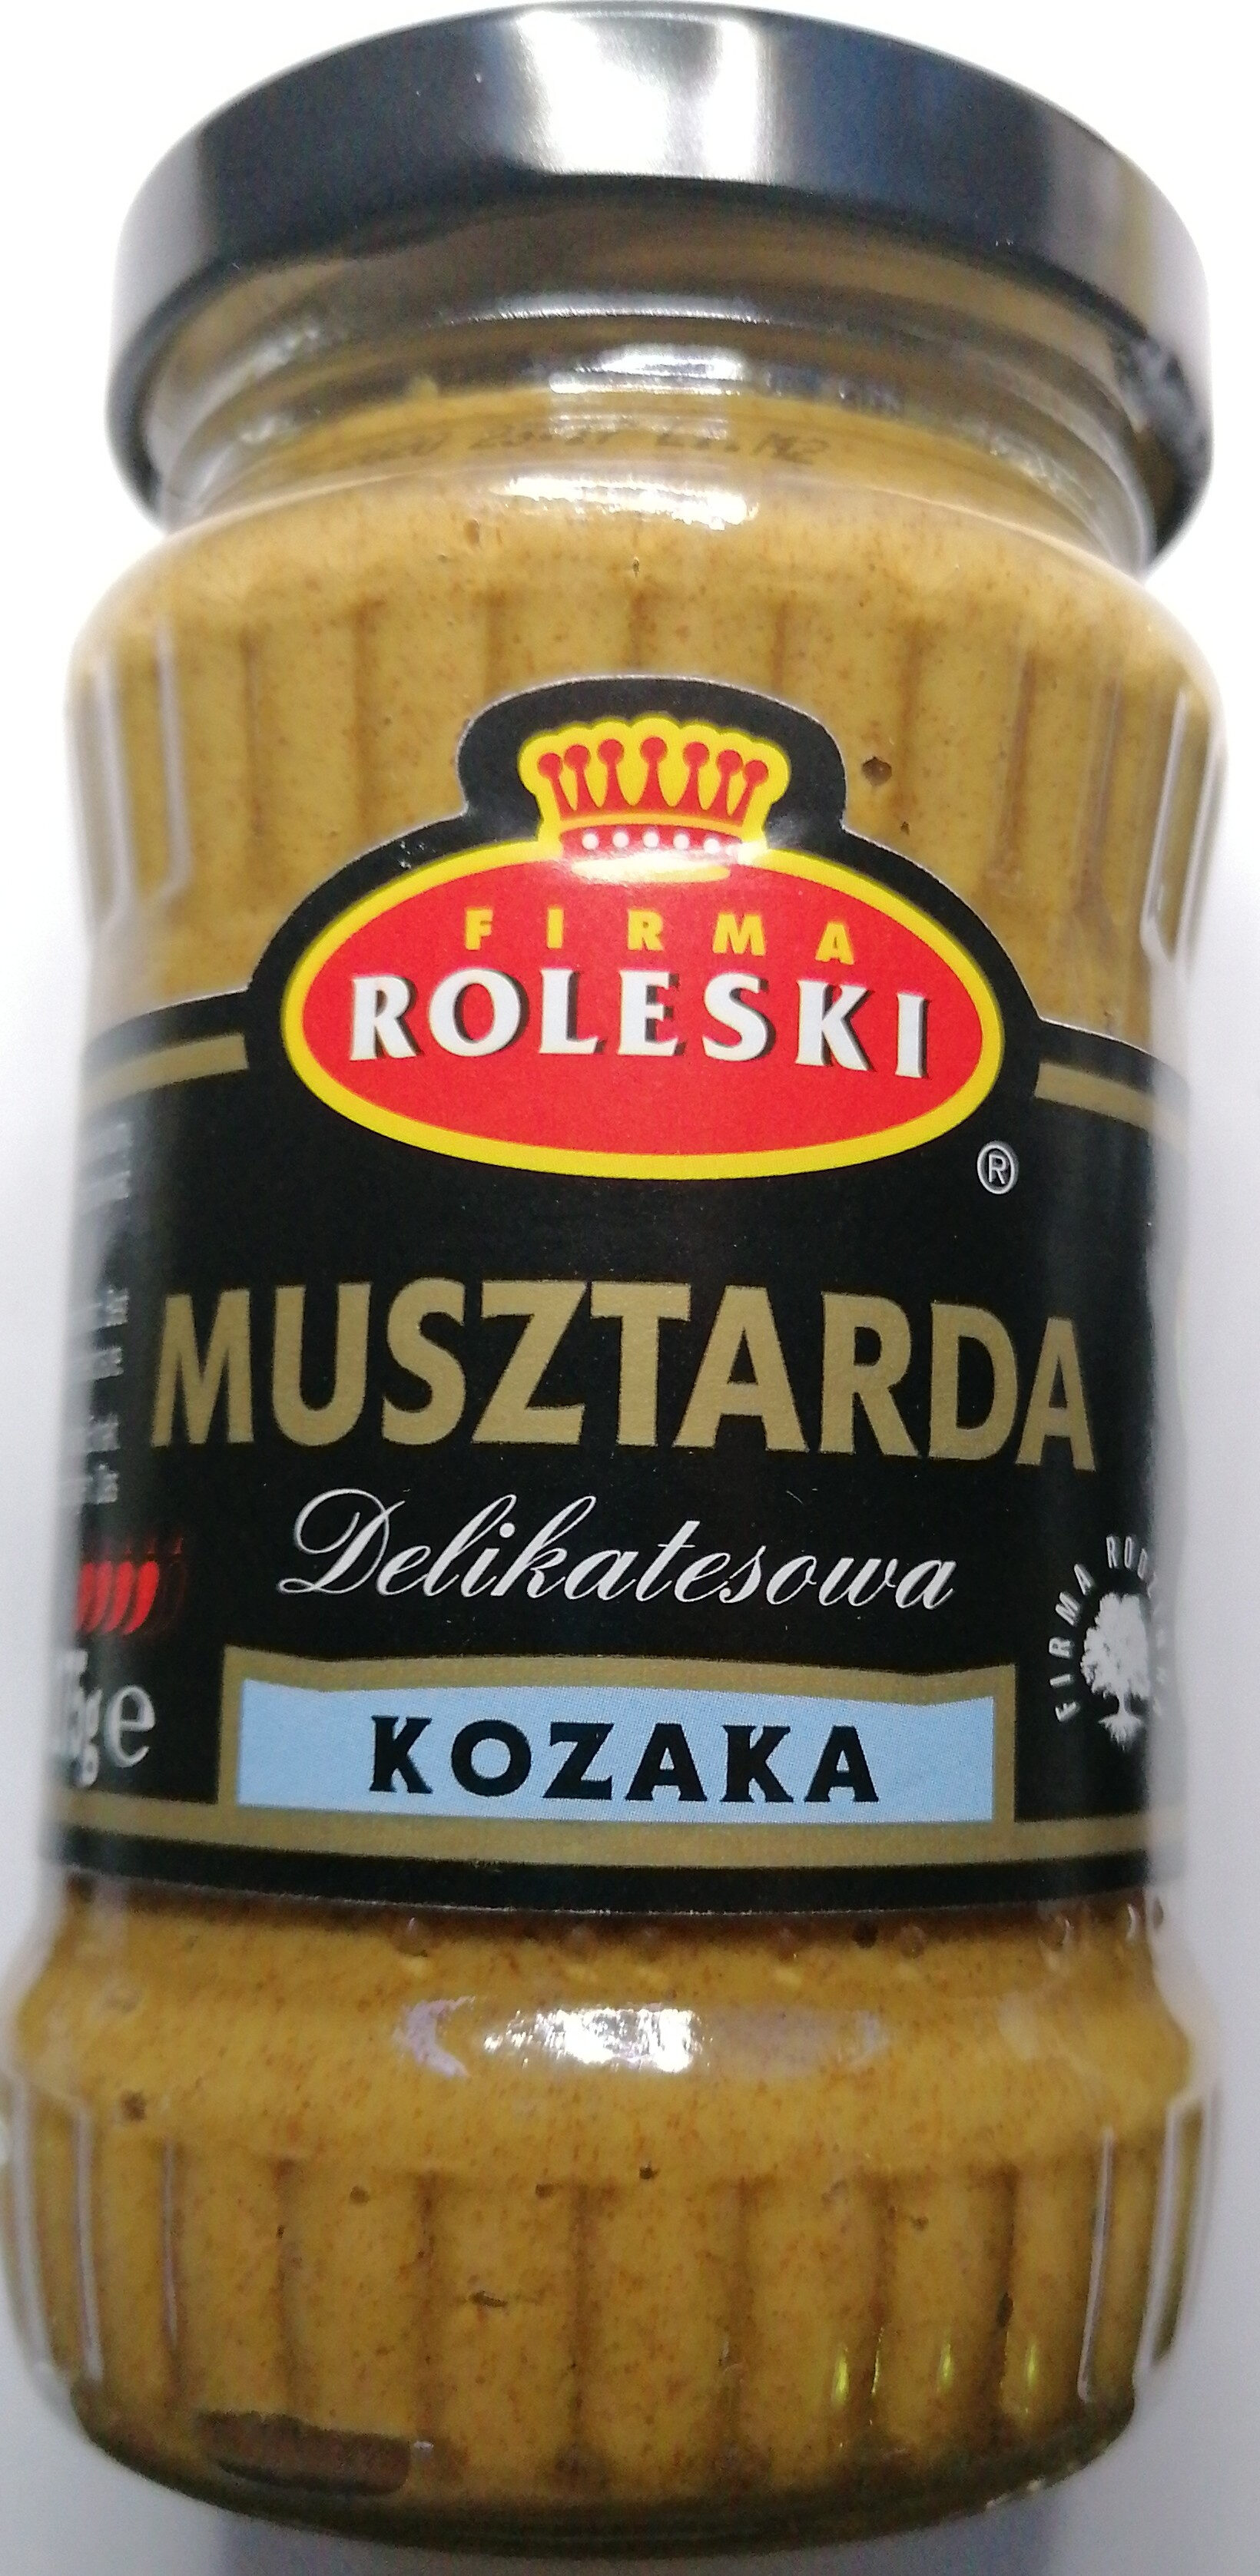 Musztarda delikatesowa kozaka - Product - pl